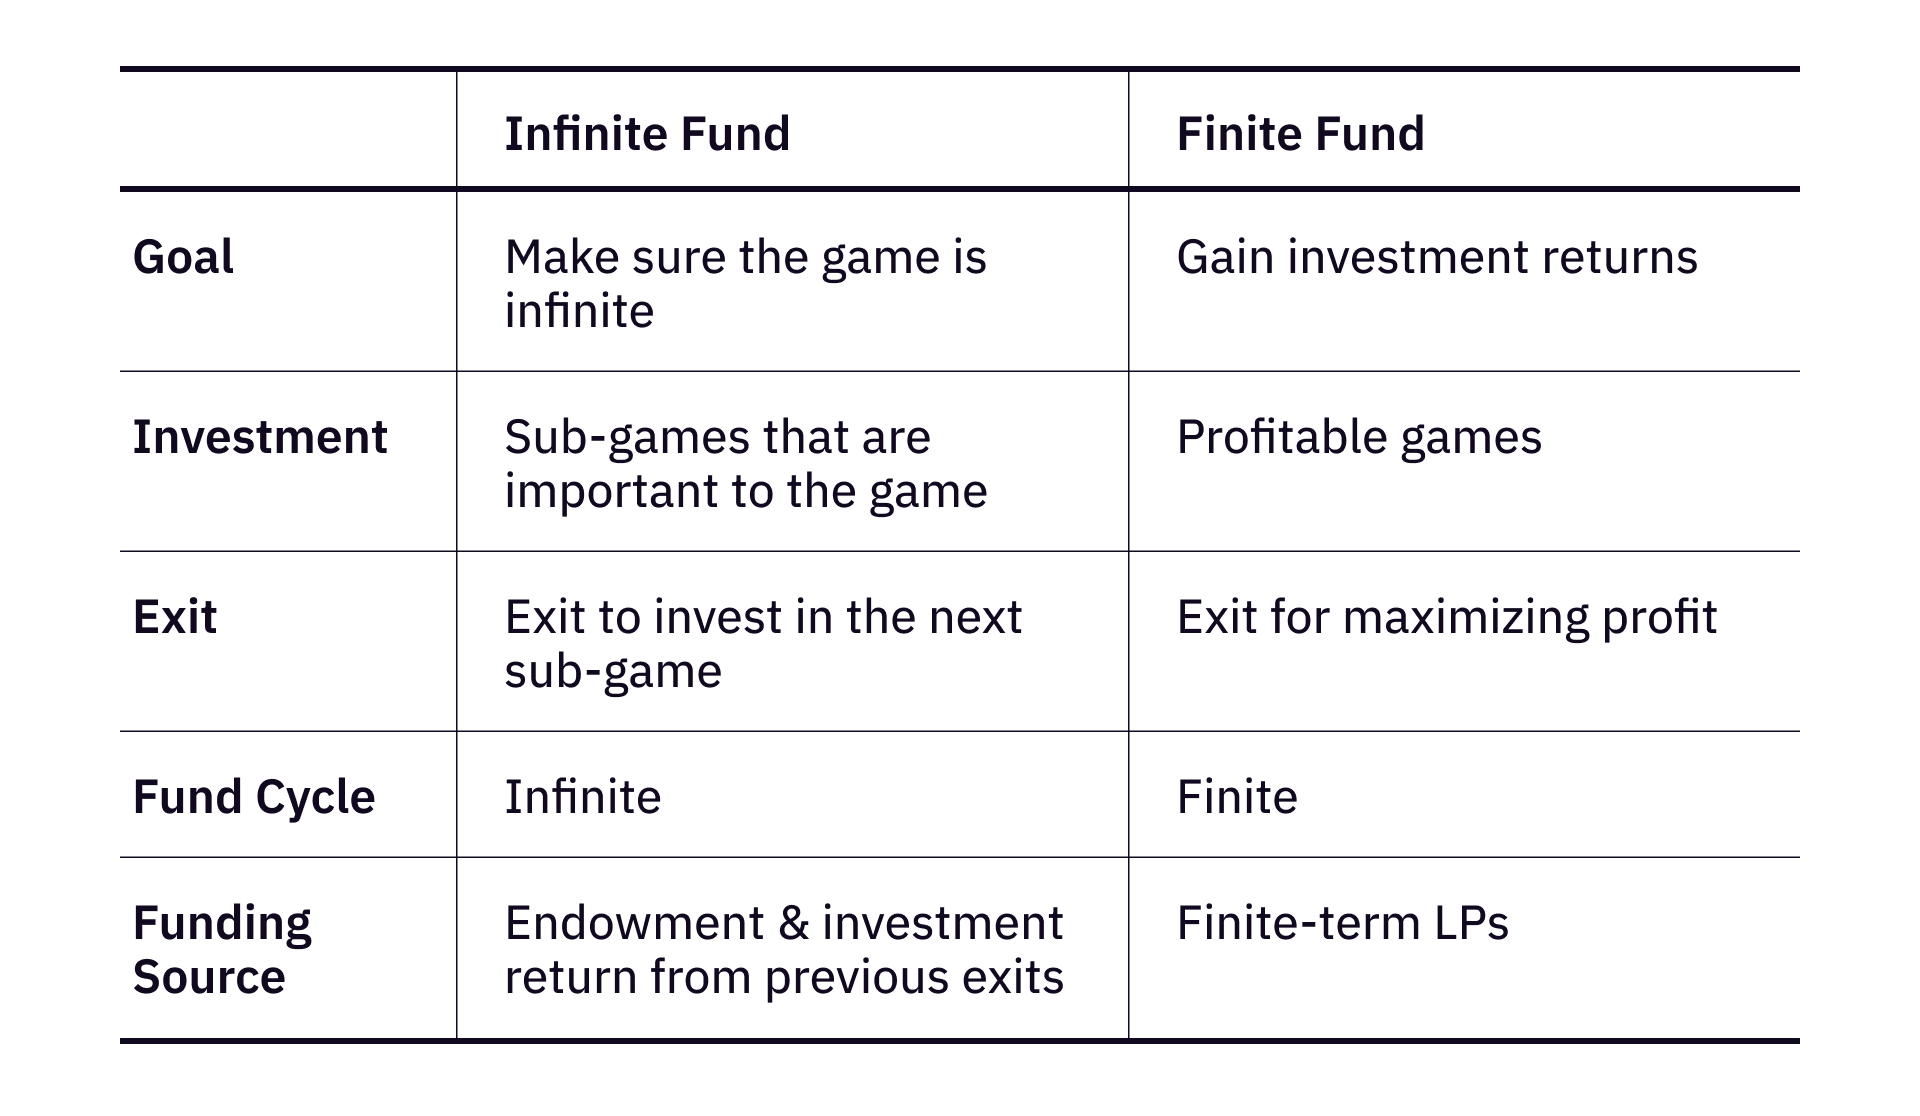 Finite and Infinite Games: Summary of Key Ideas